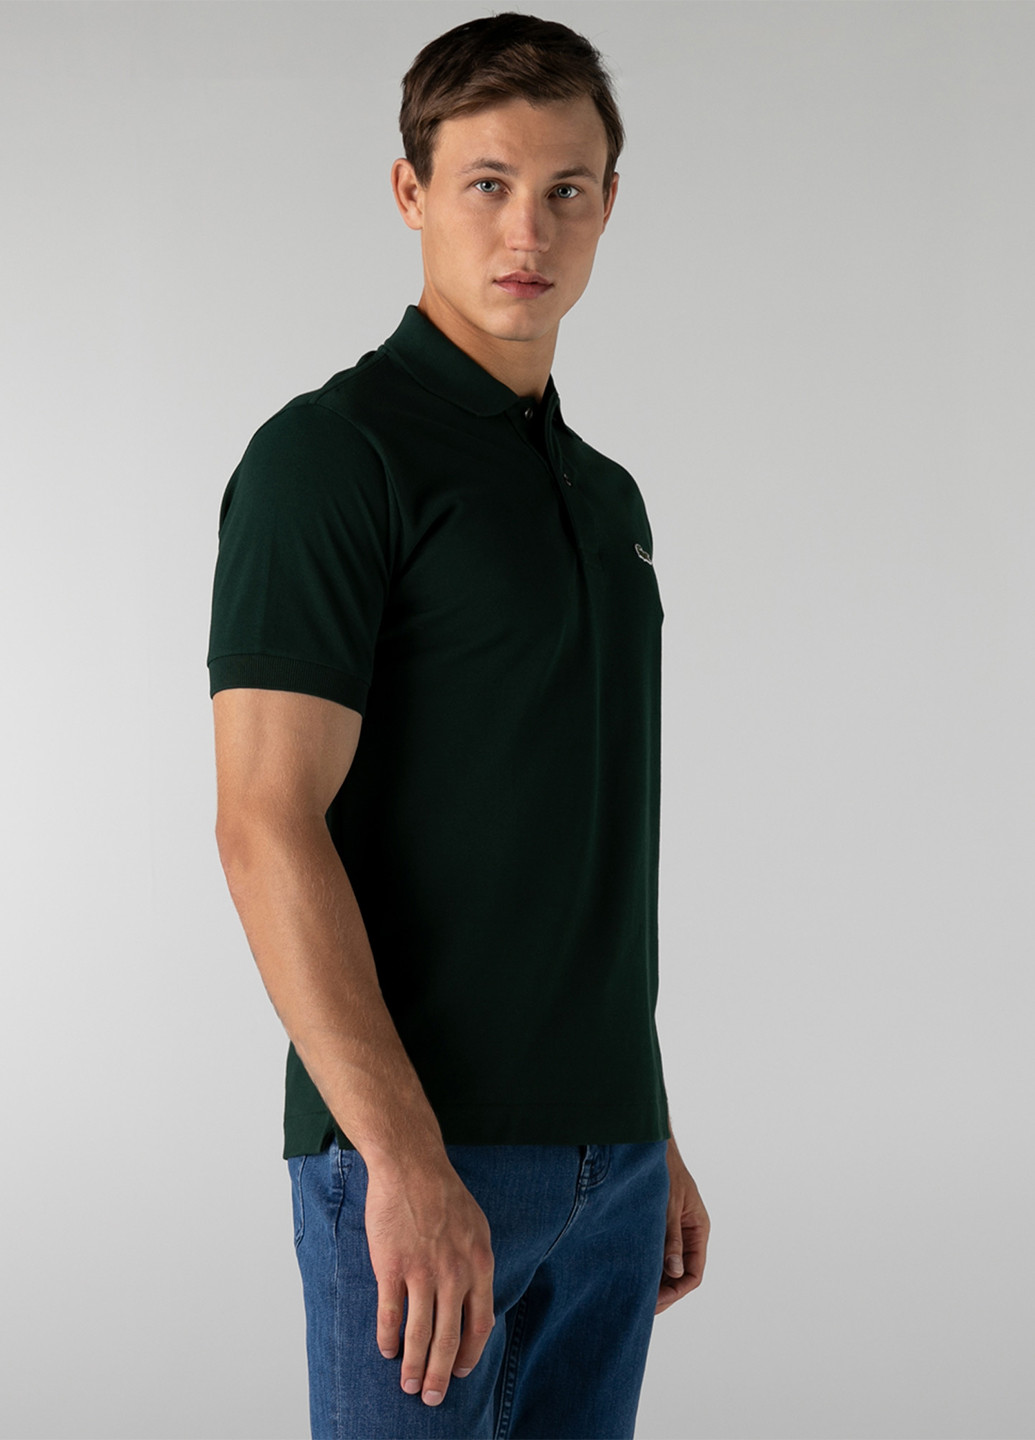 Темно-зеленая футболка-поло для мужчин Lacoste с логотипом